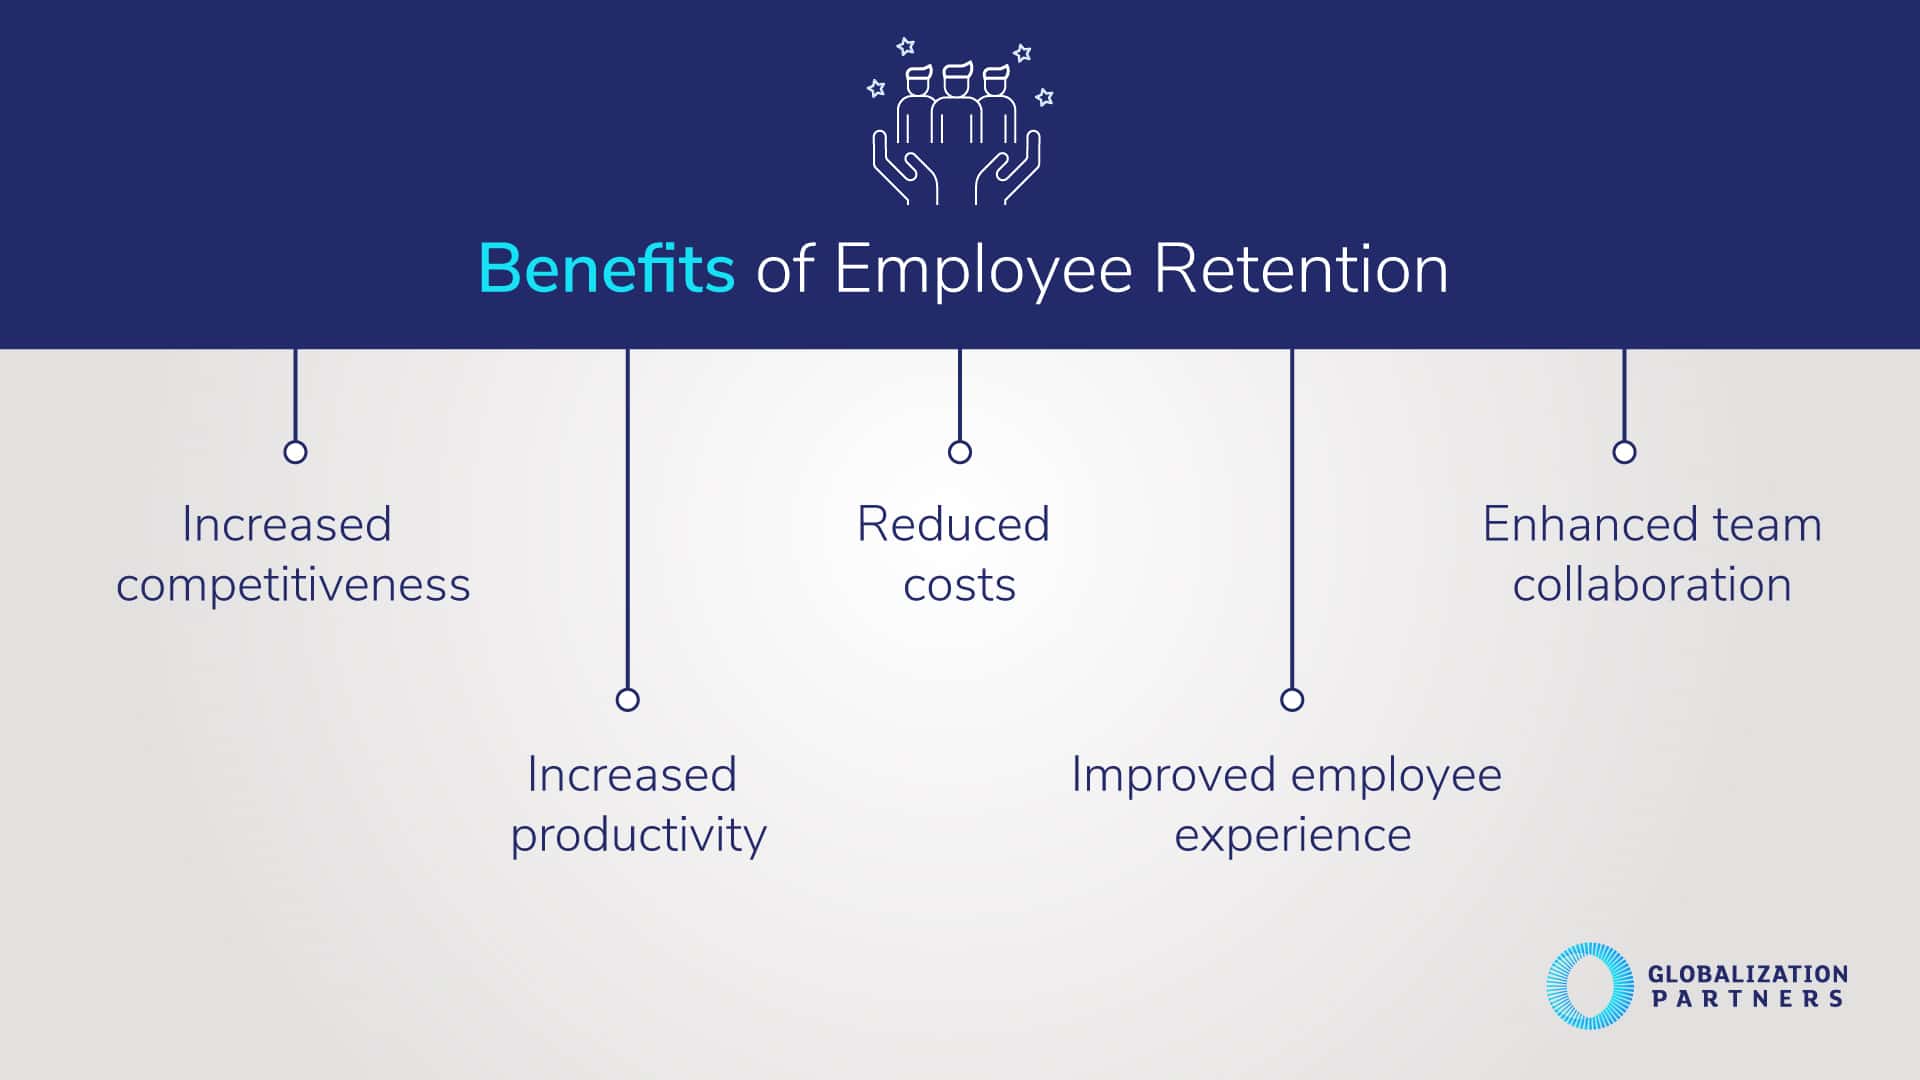 Benefits of Employee Retention